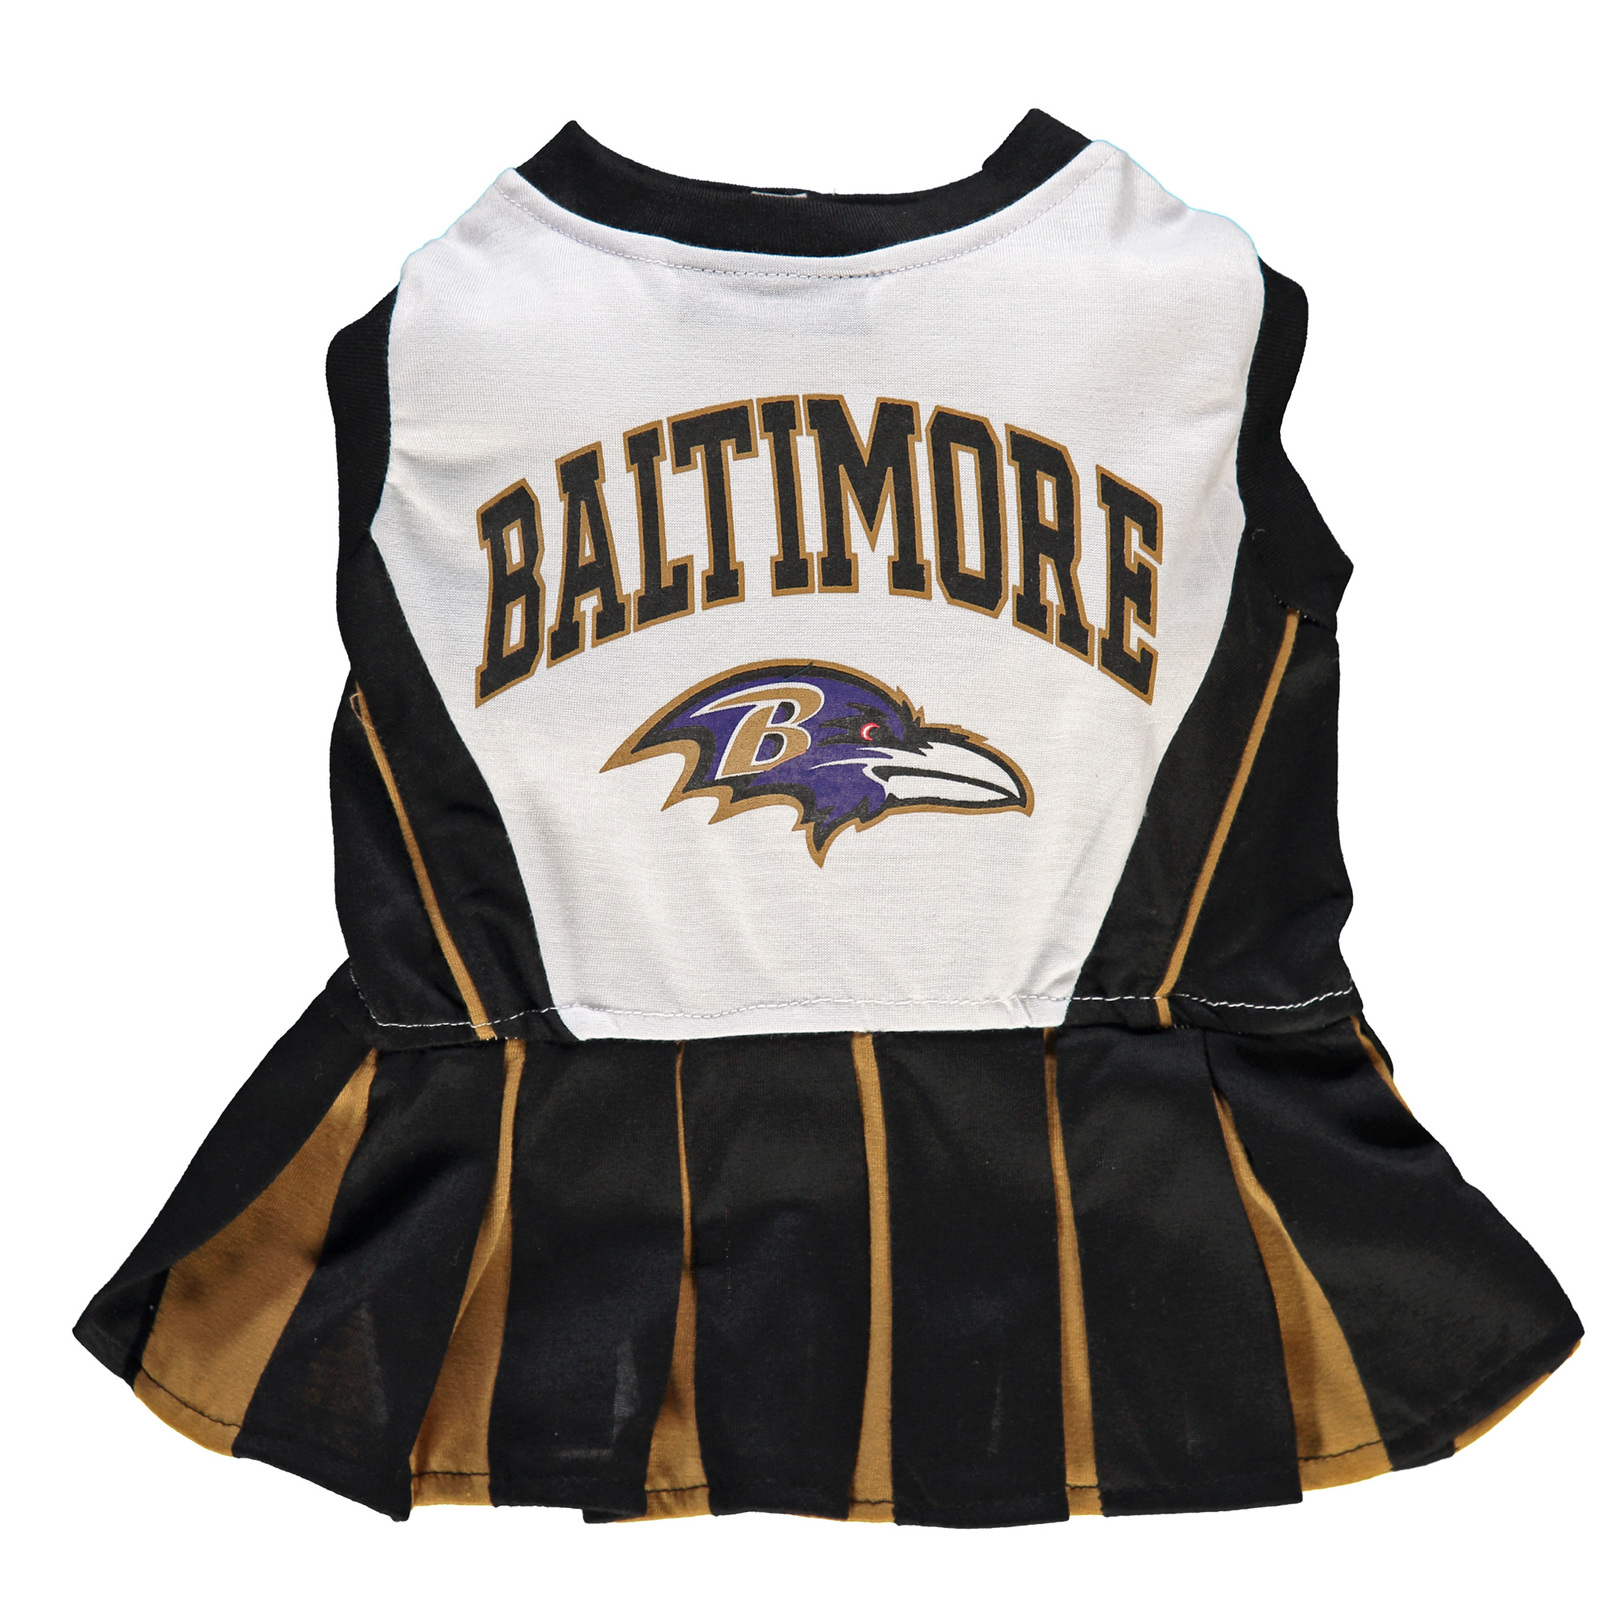 Baltimore Ravens NFL Cheerleader Dress For Dogs - Size Medium - $25.00